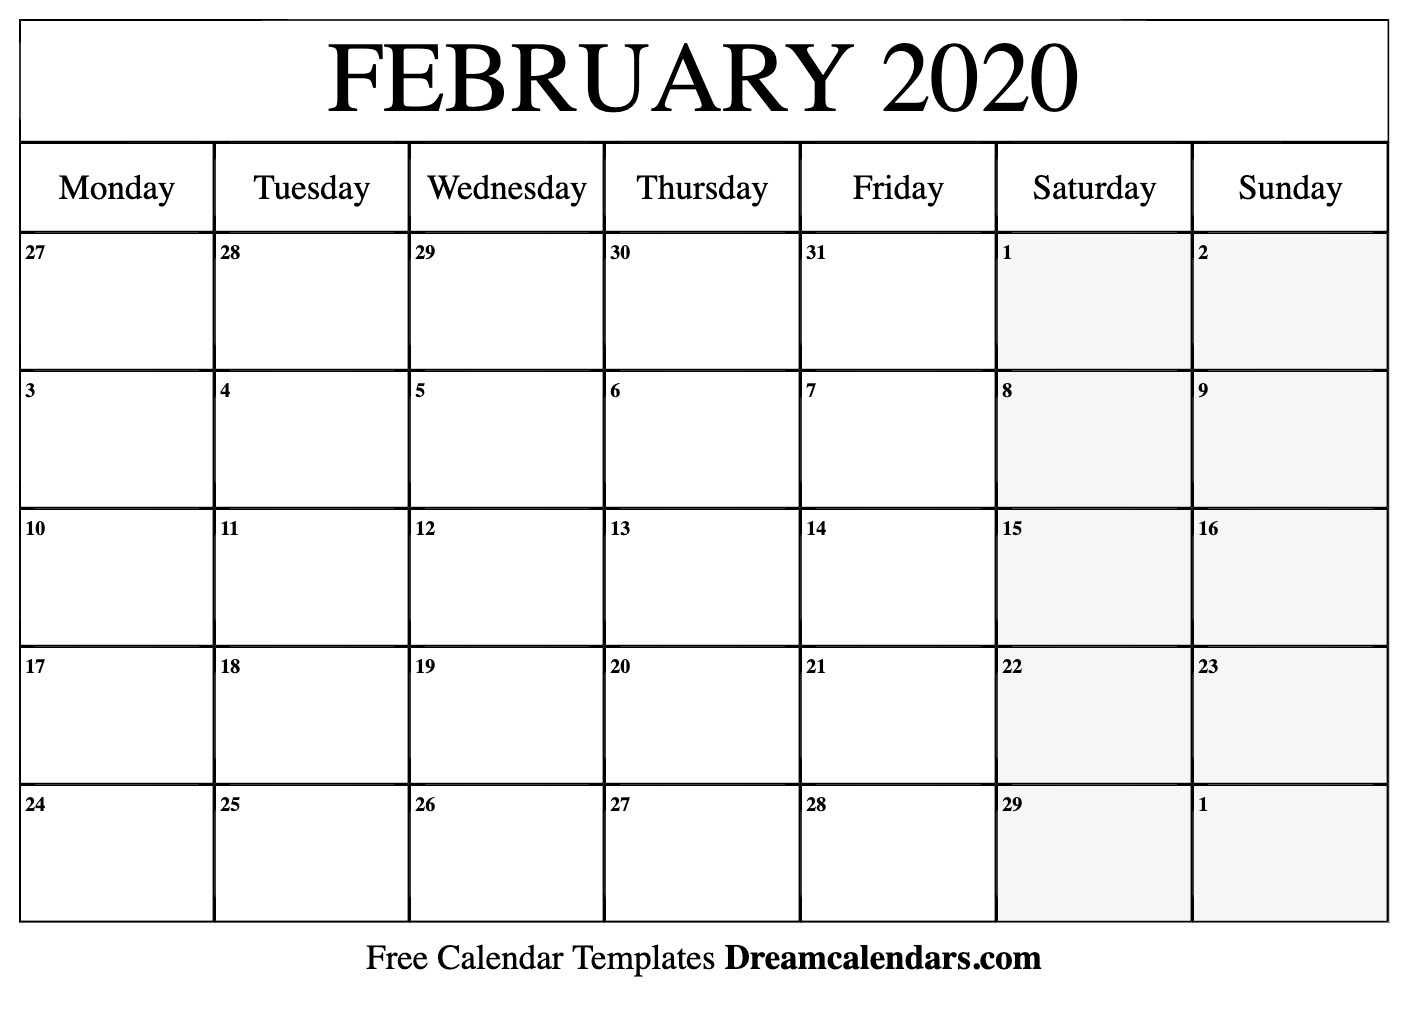 February 2020 Calendar | Free Blank Printable Templates